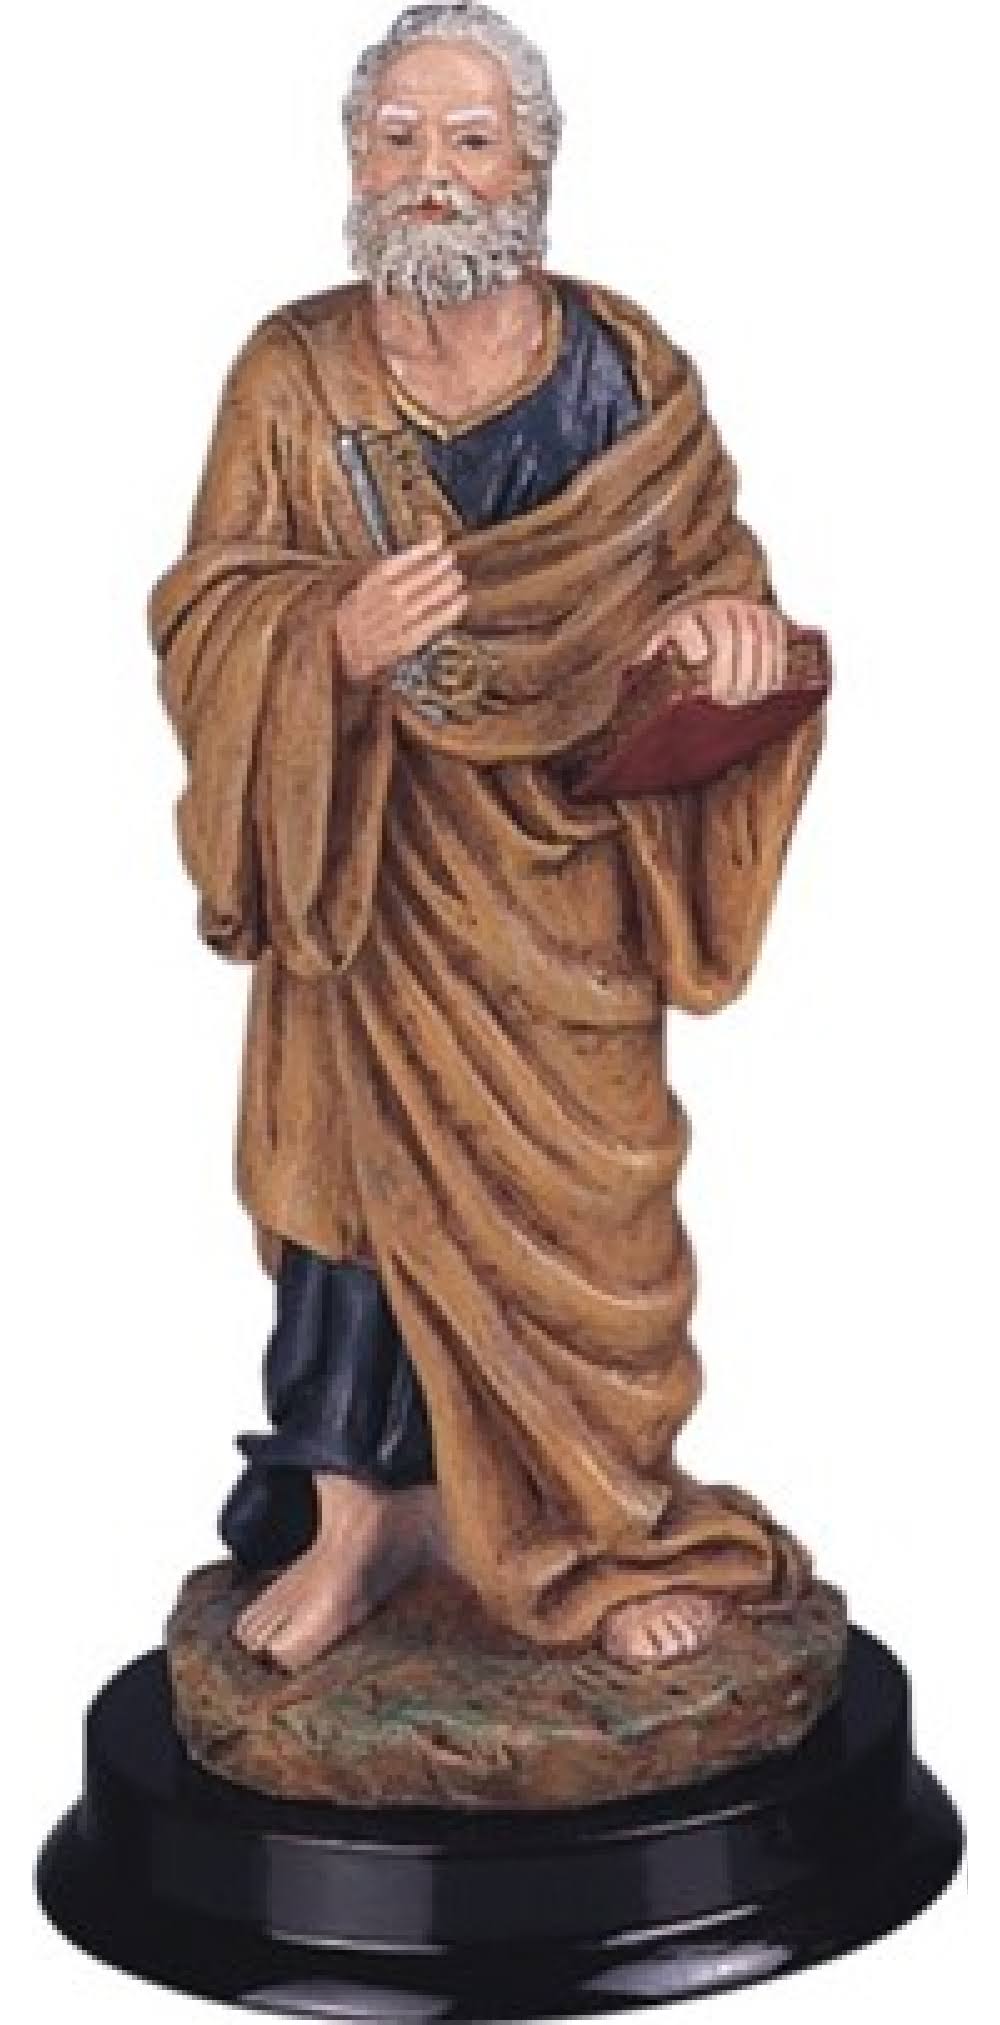 Stealstreet Saint Peter Holy Figurine Religious Statue Decor, 5"